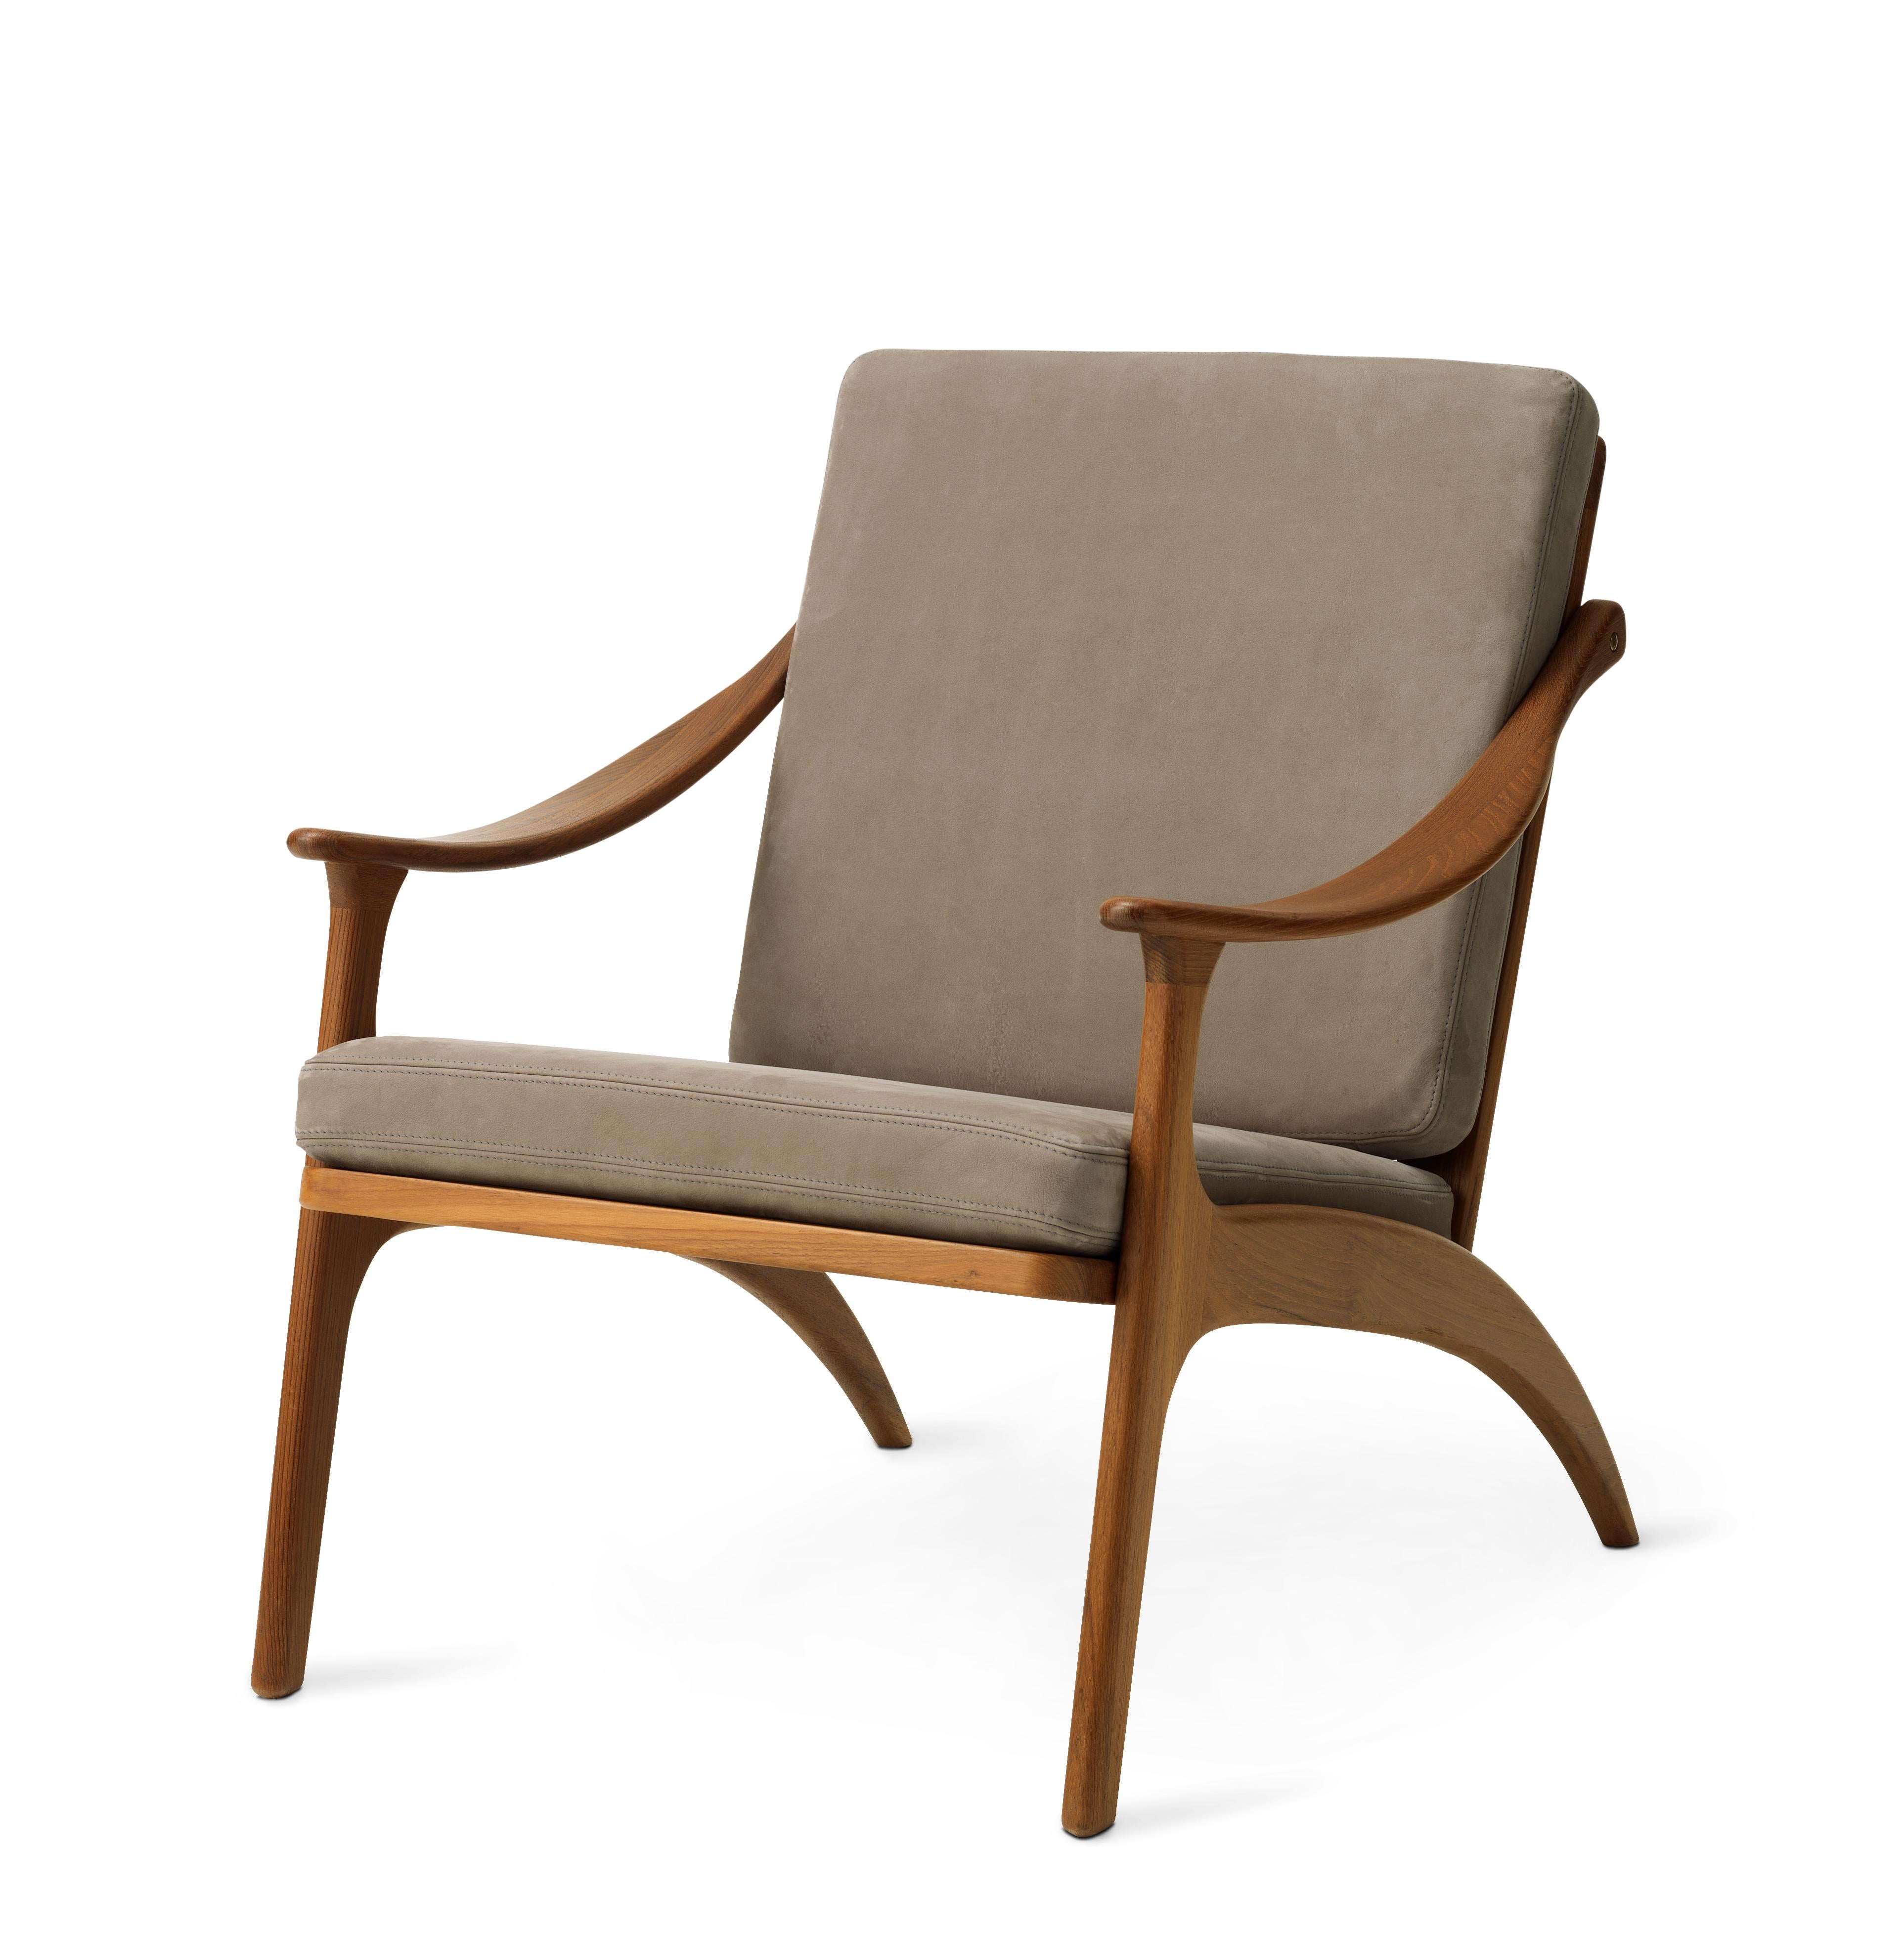 For Sale: Brown (Nabuk Seppia) Lean Back Monochrome Lounge Chair in Teak, by Arne Hovmand-Olsen from Warm